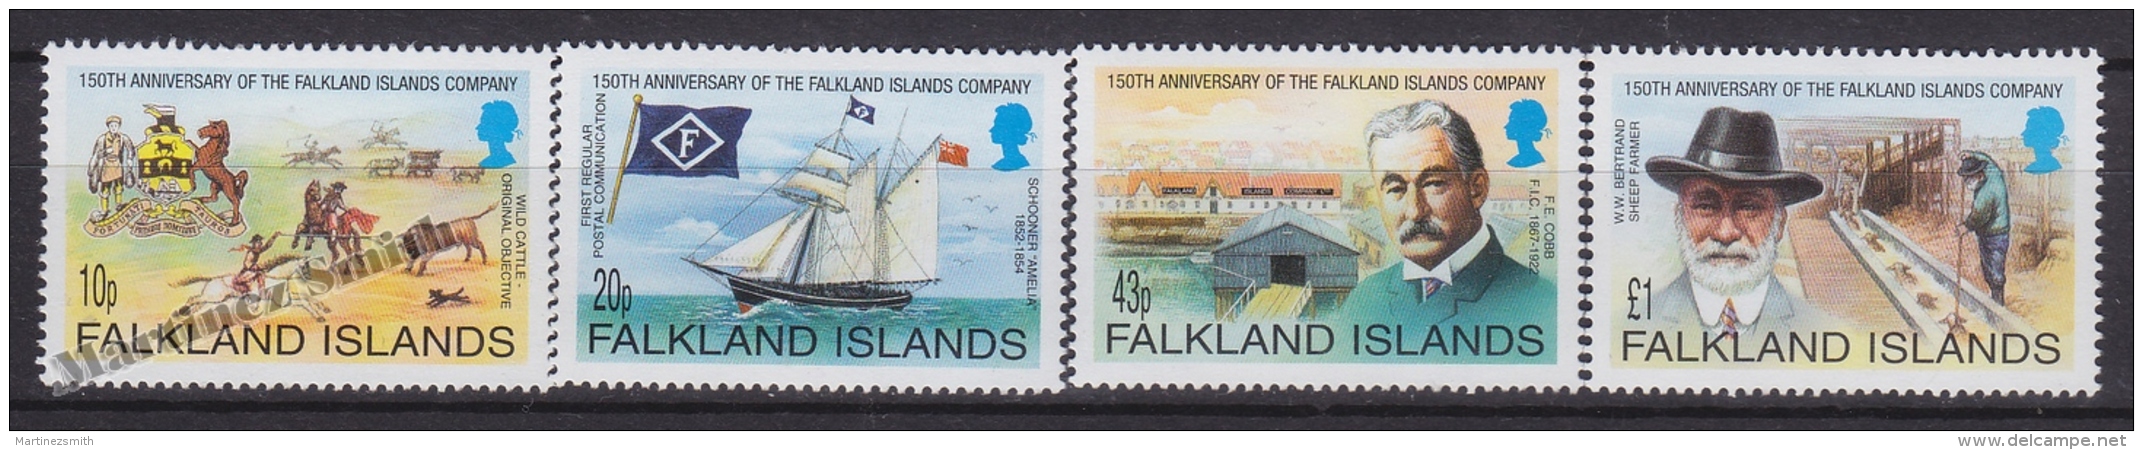 Falkland Islands 2002 Yvert 813-16, 150th Anniv Of The Falkland Islands Company - MNH - Falkland Islands